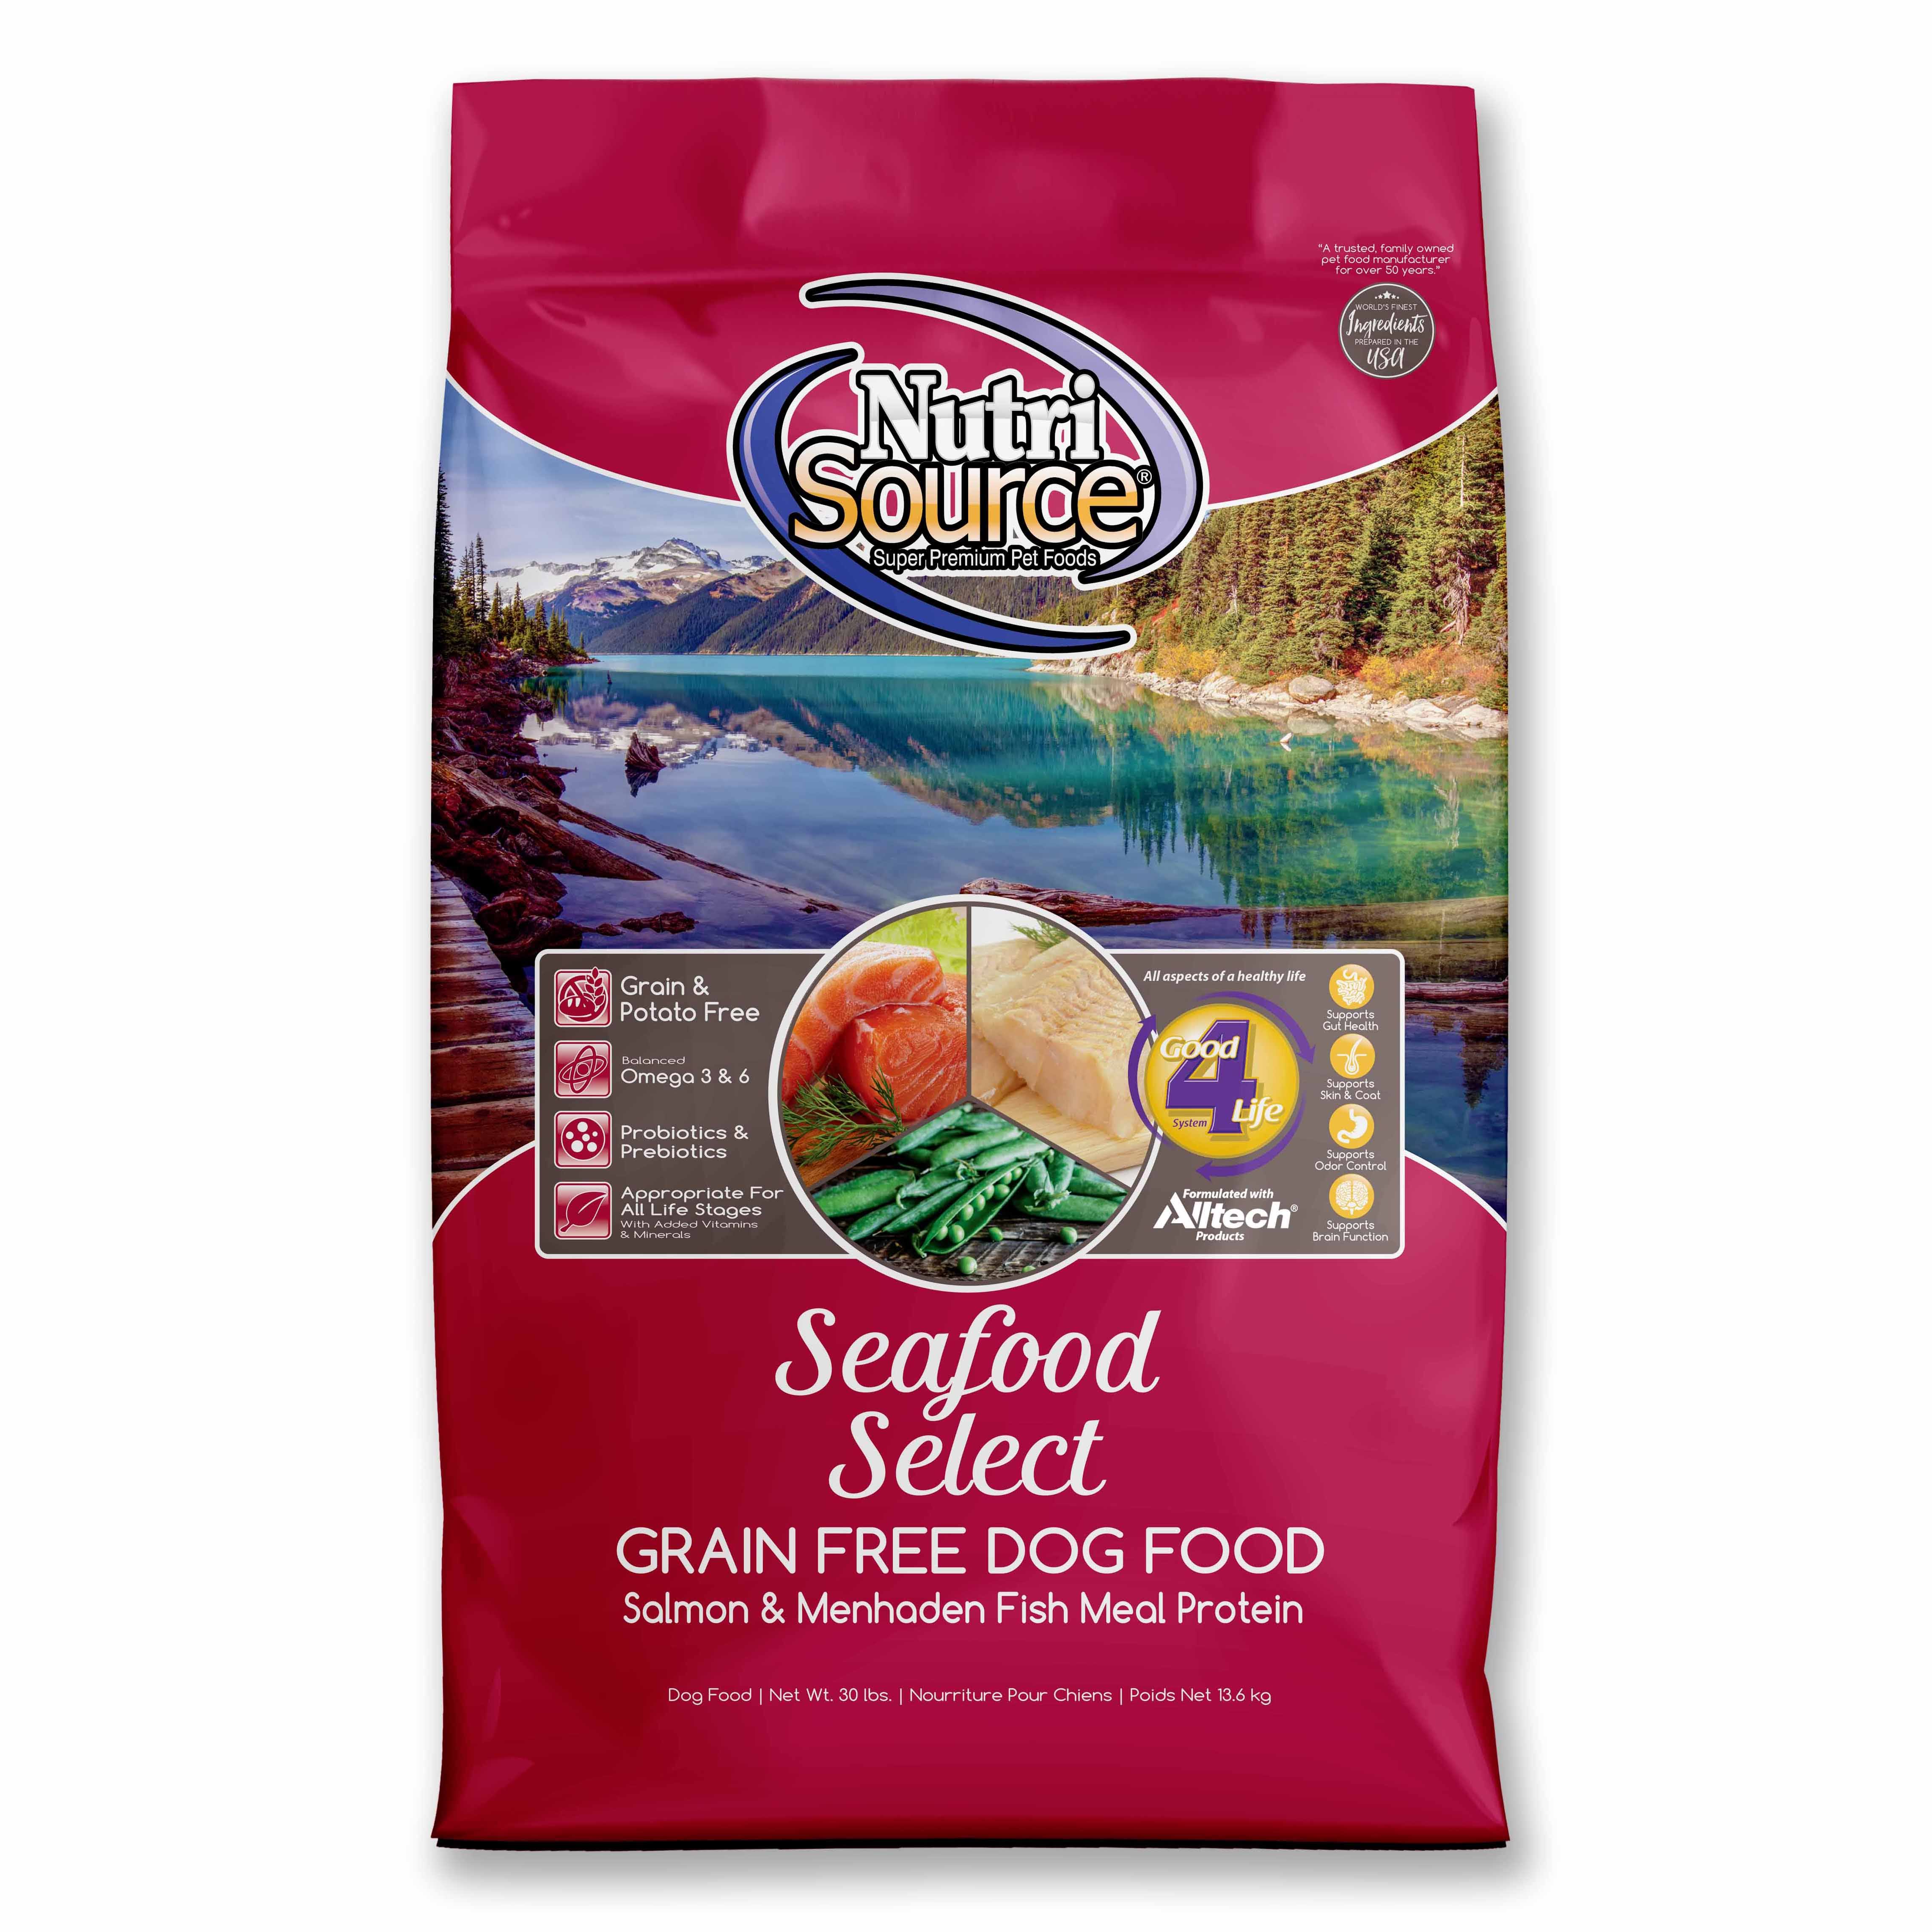 Nutrisource Grain Free Dry Dog Food - Seafood Select, 5lbs